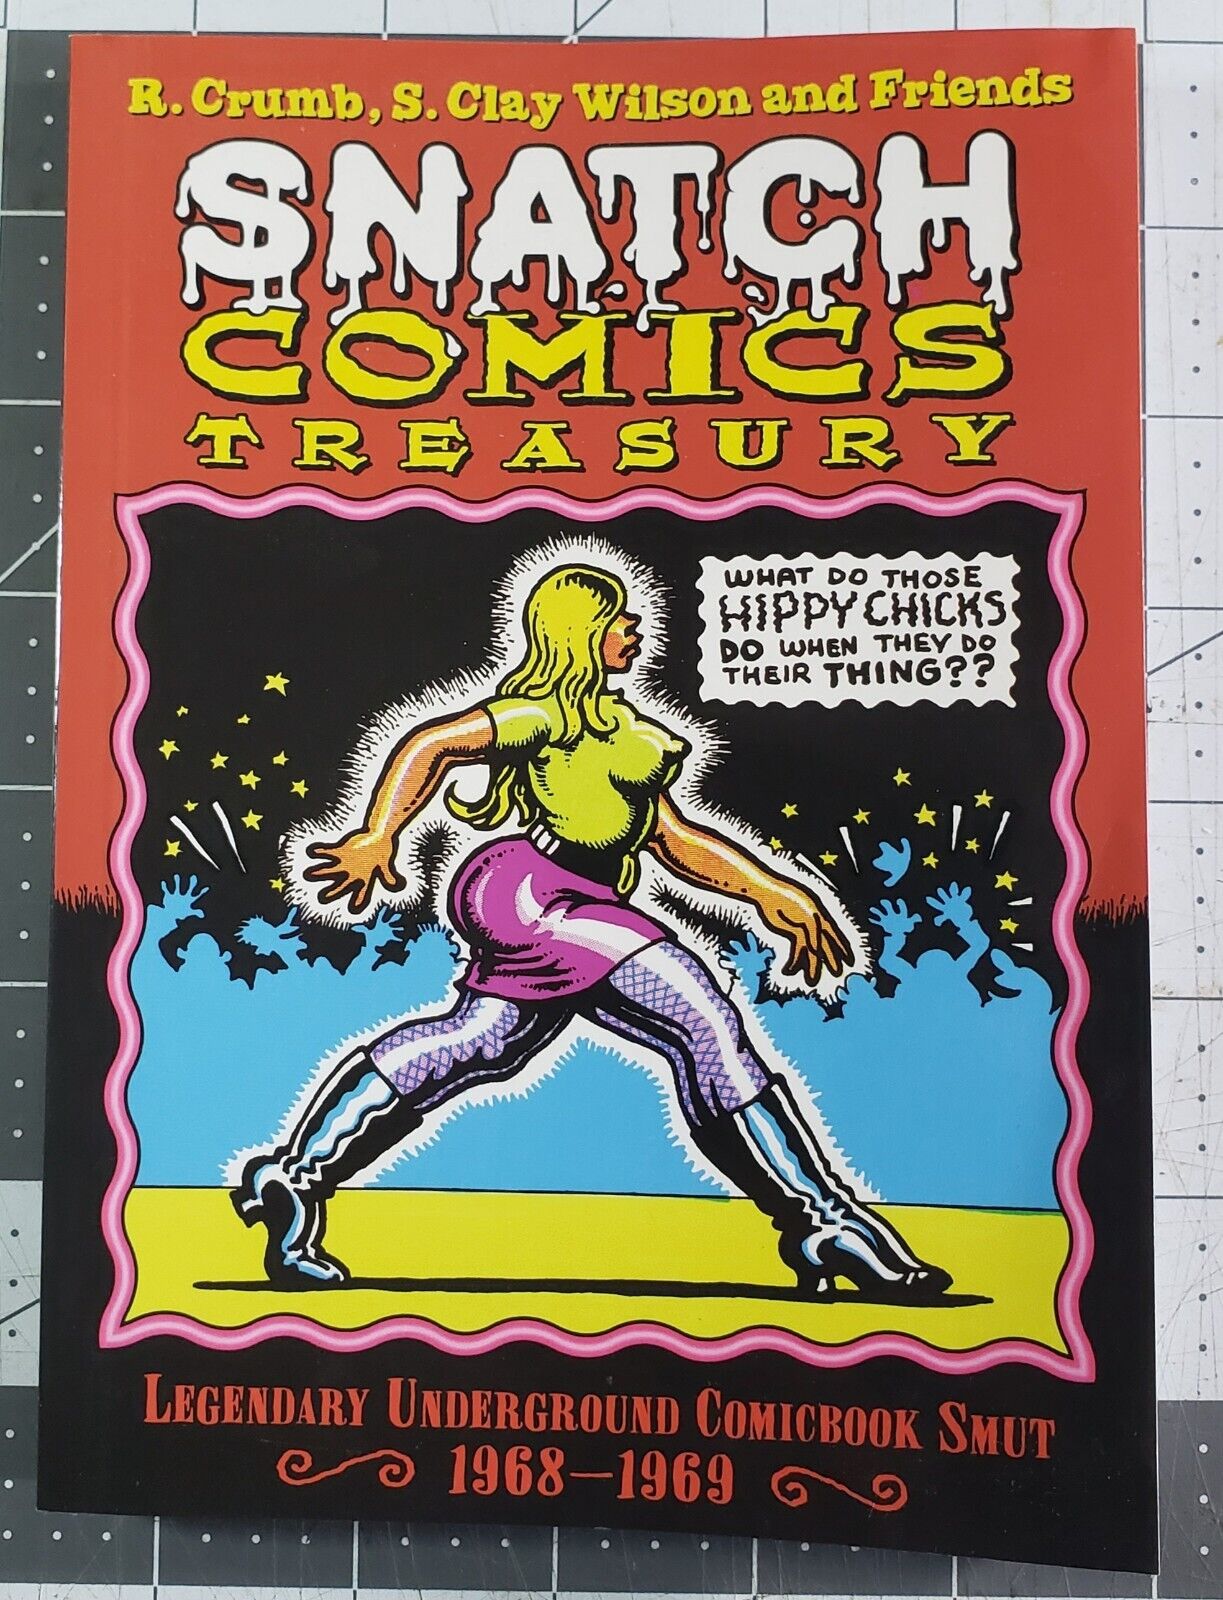 Snatch Comics Treasury (R. Crumb, S. Clay Wilson) - 1st Edition 2011 